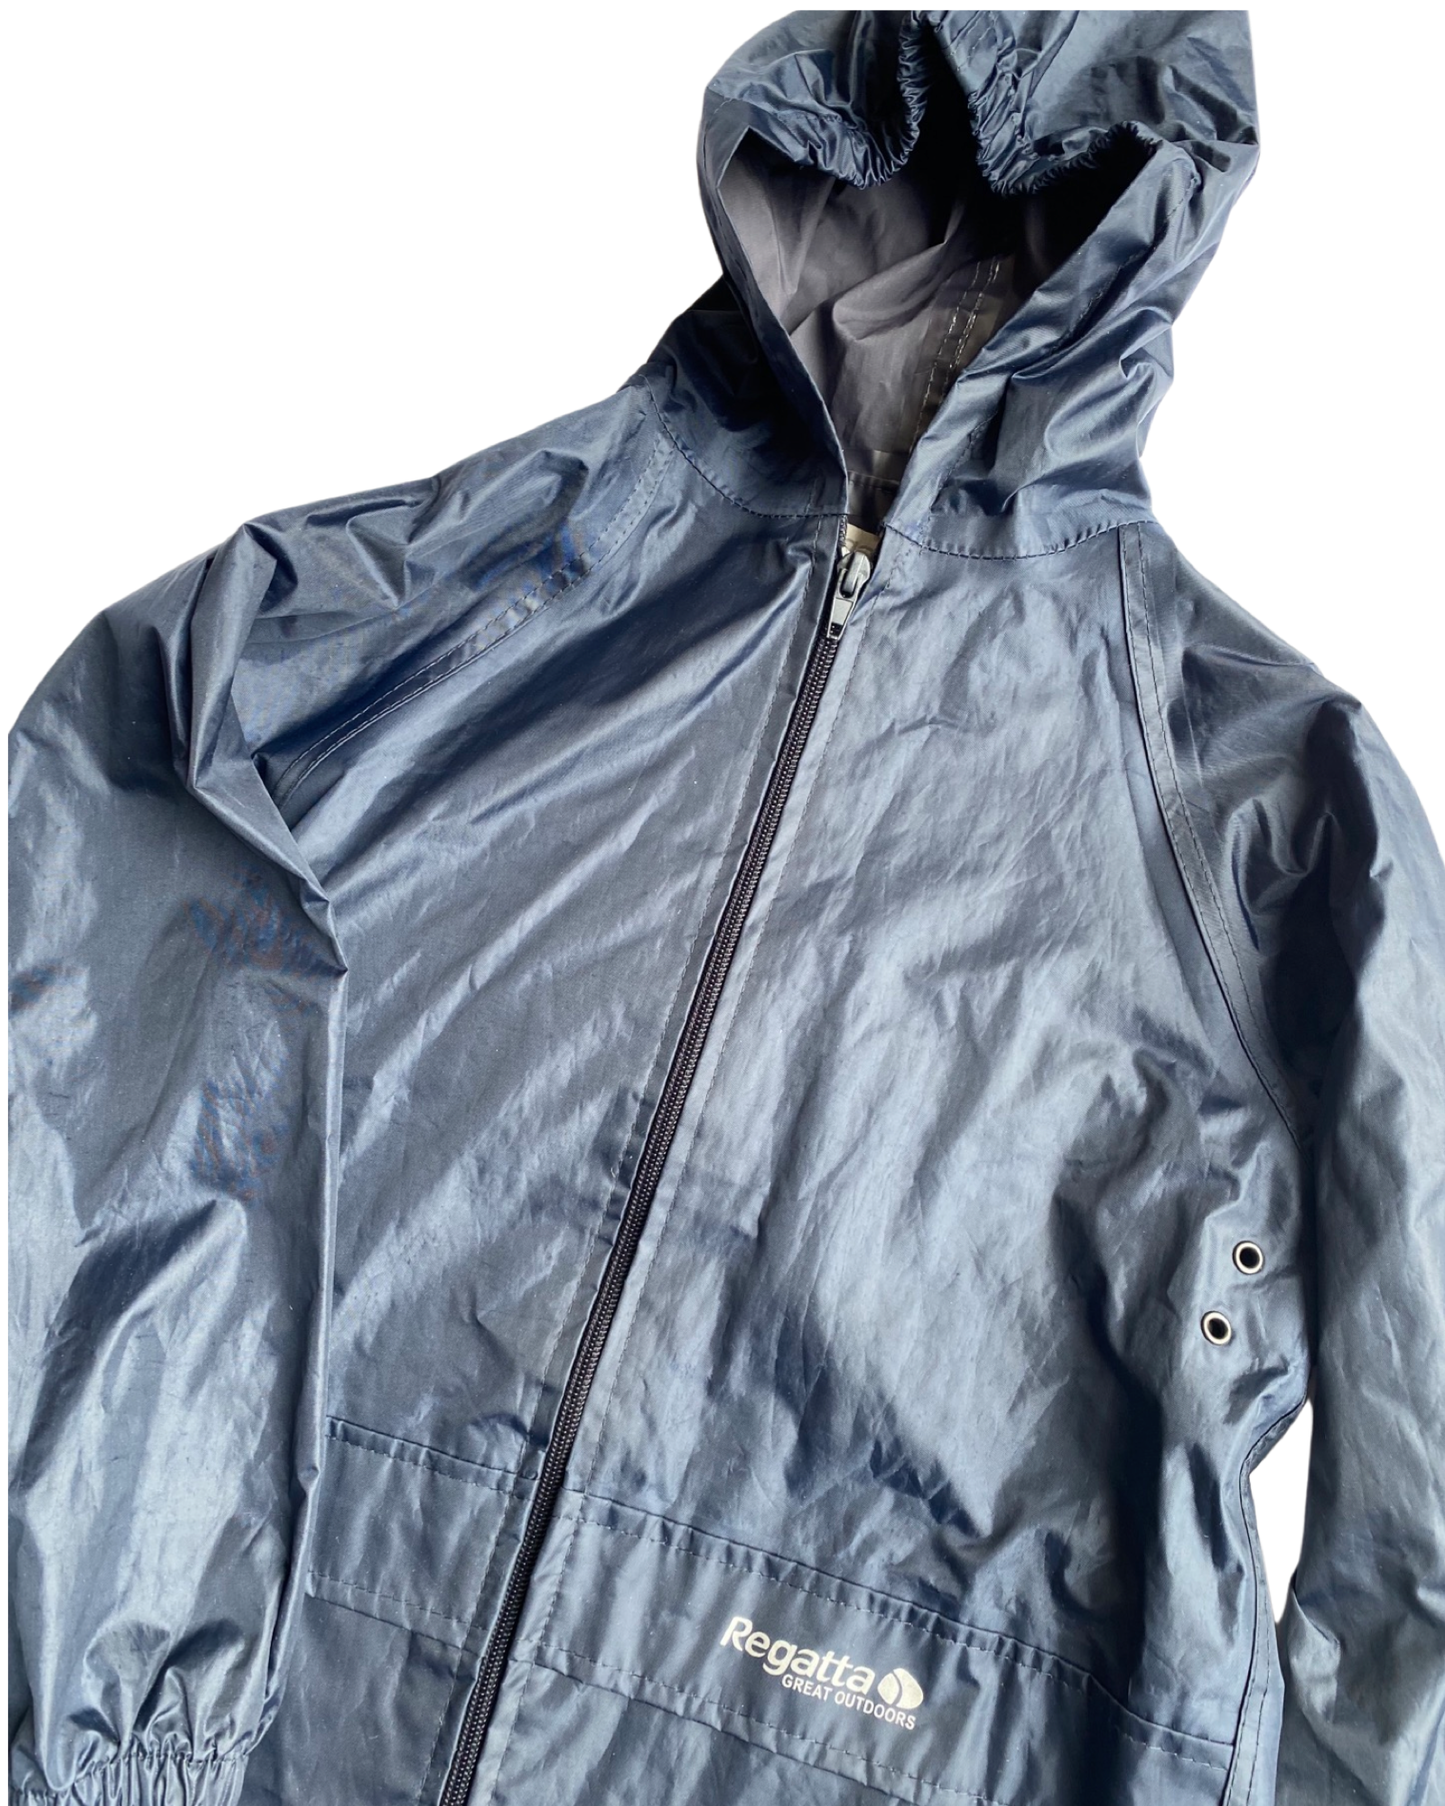 Regatta navy waterproof rain jacket (7-8yrs)